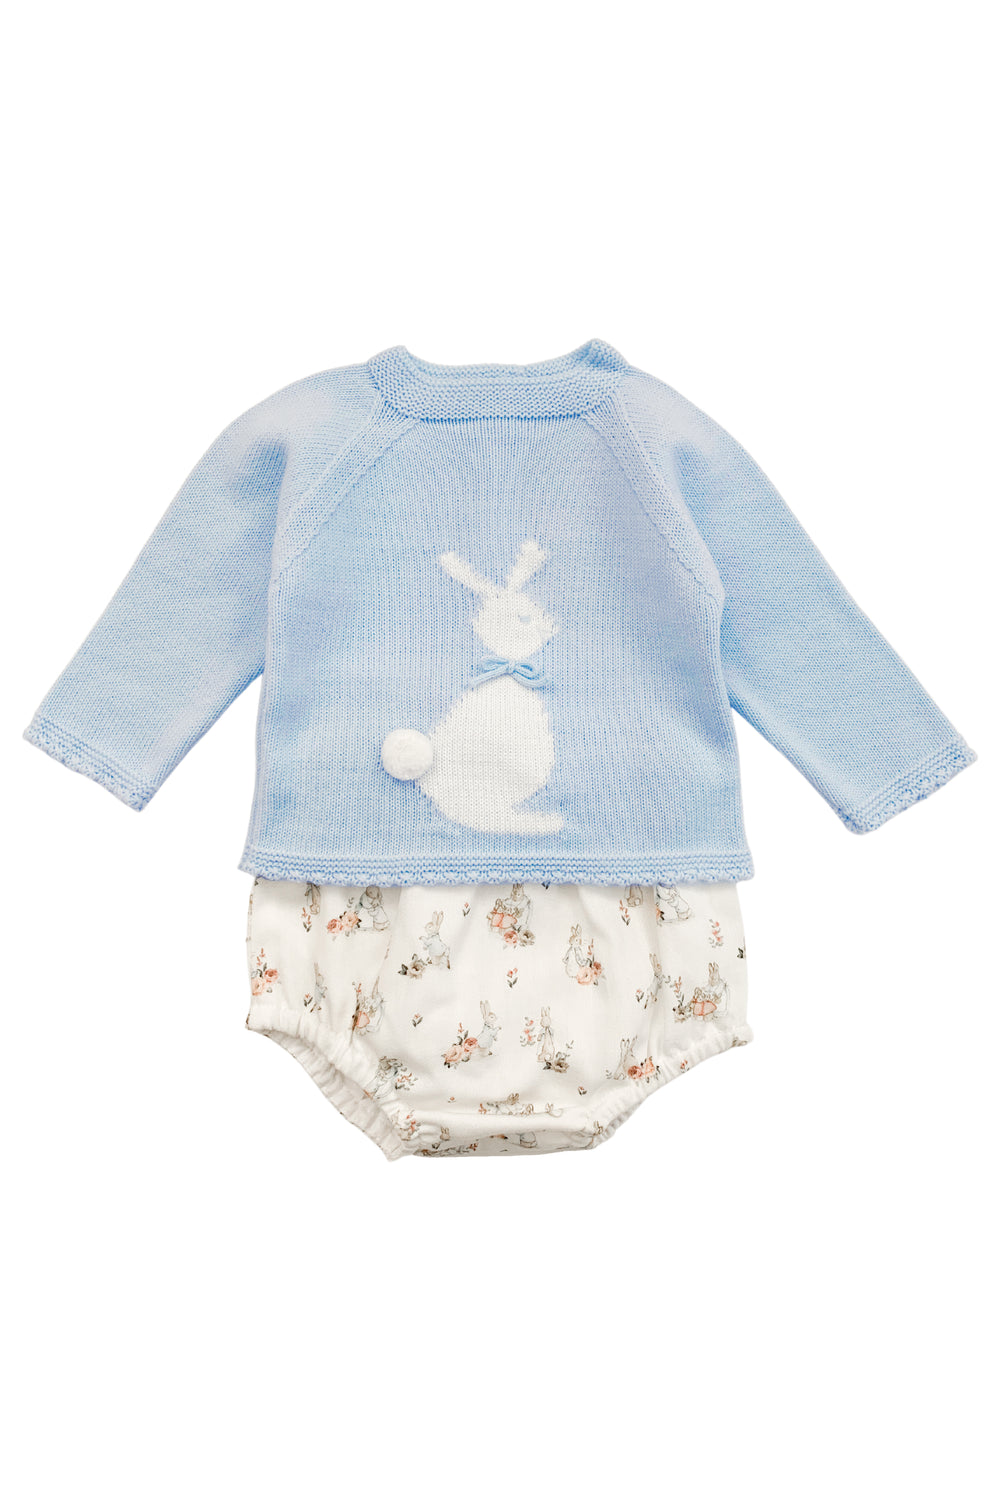 Granlei "Hadley" Blue Knit Peter Rabbit Top & Jam Pants | Millie and John